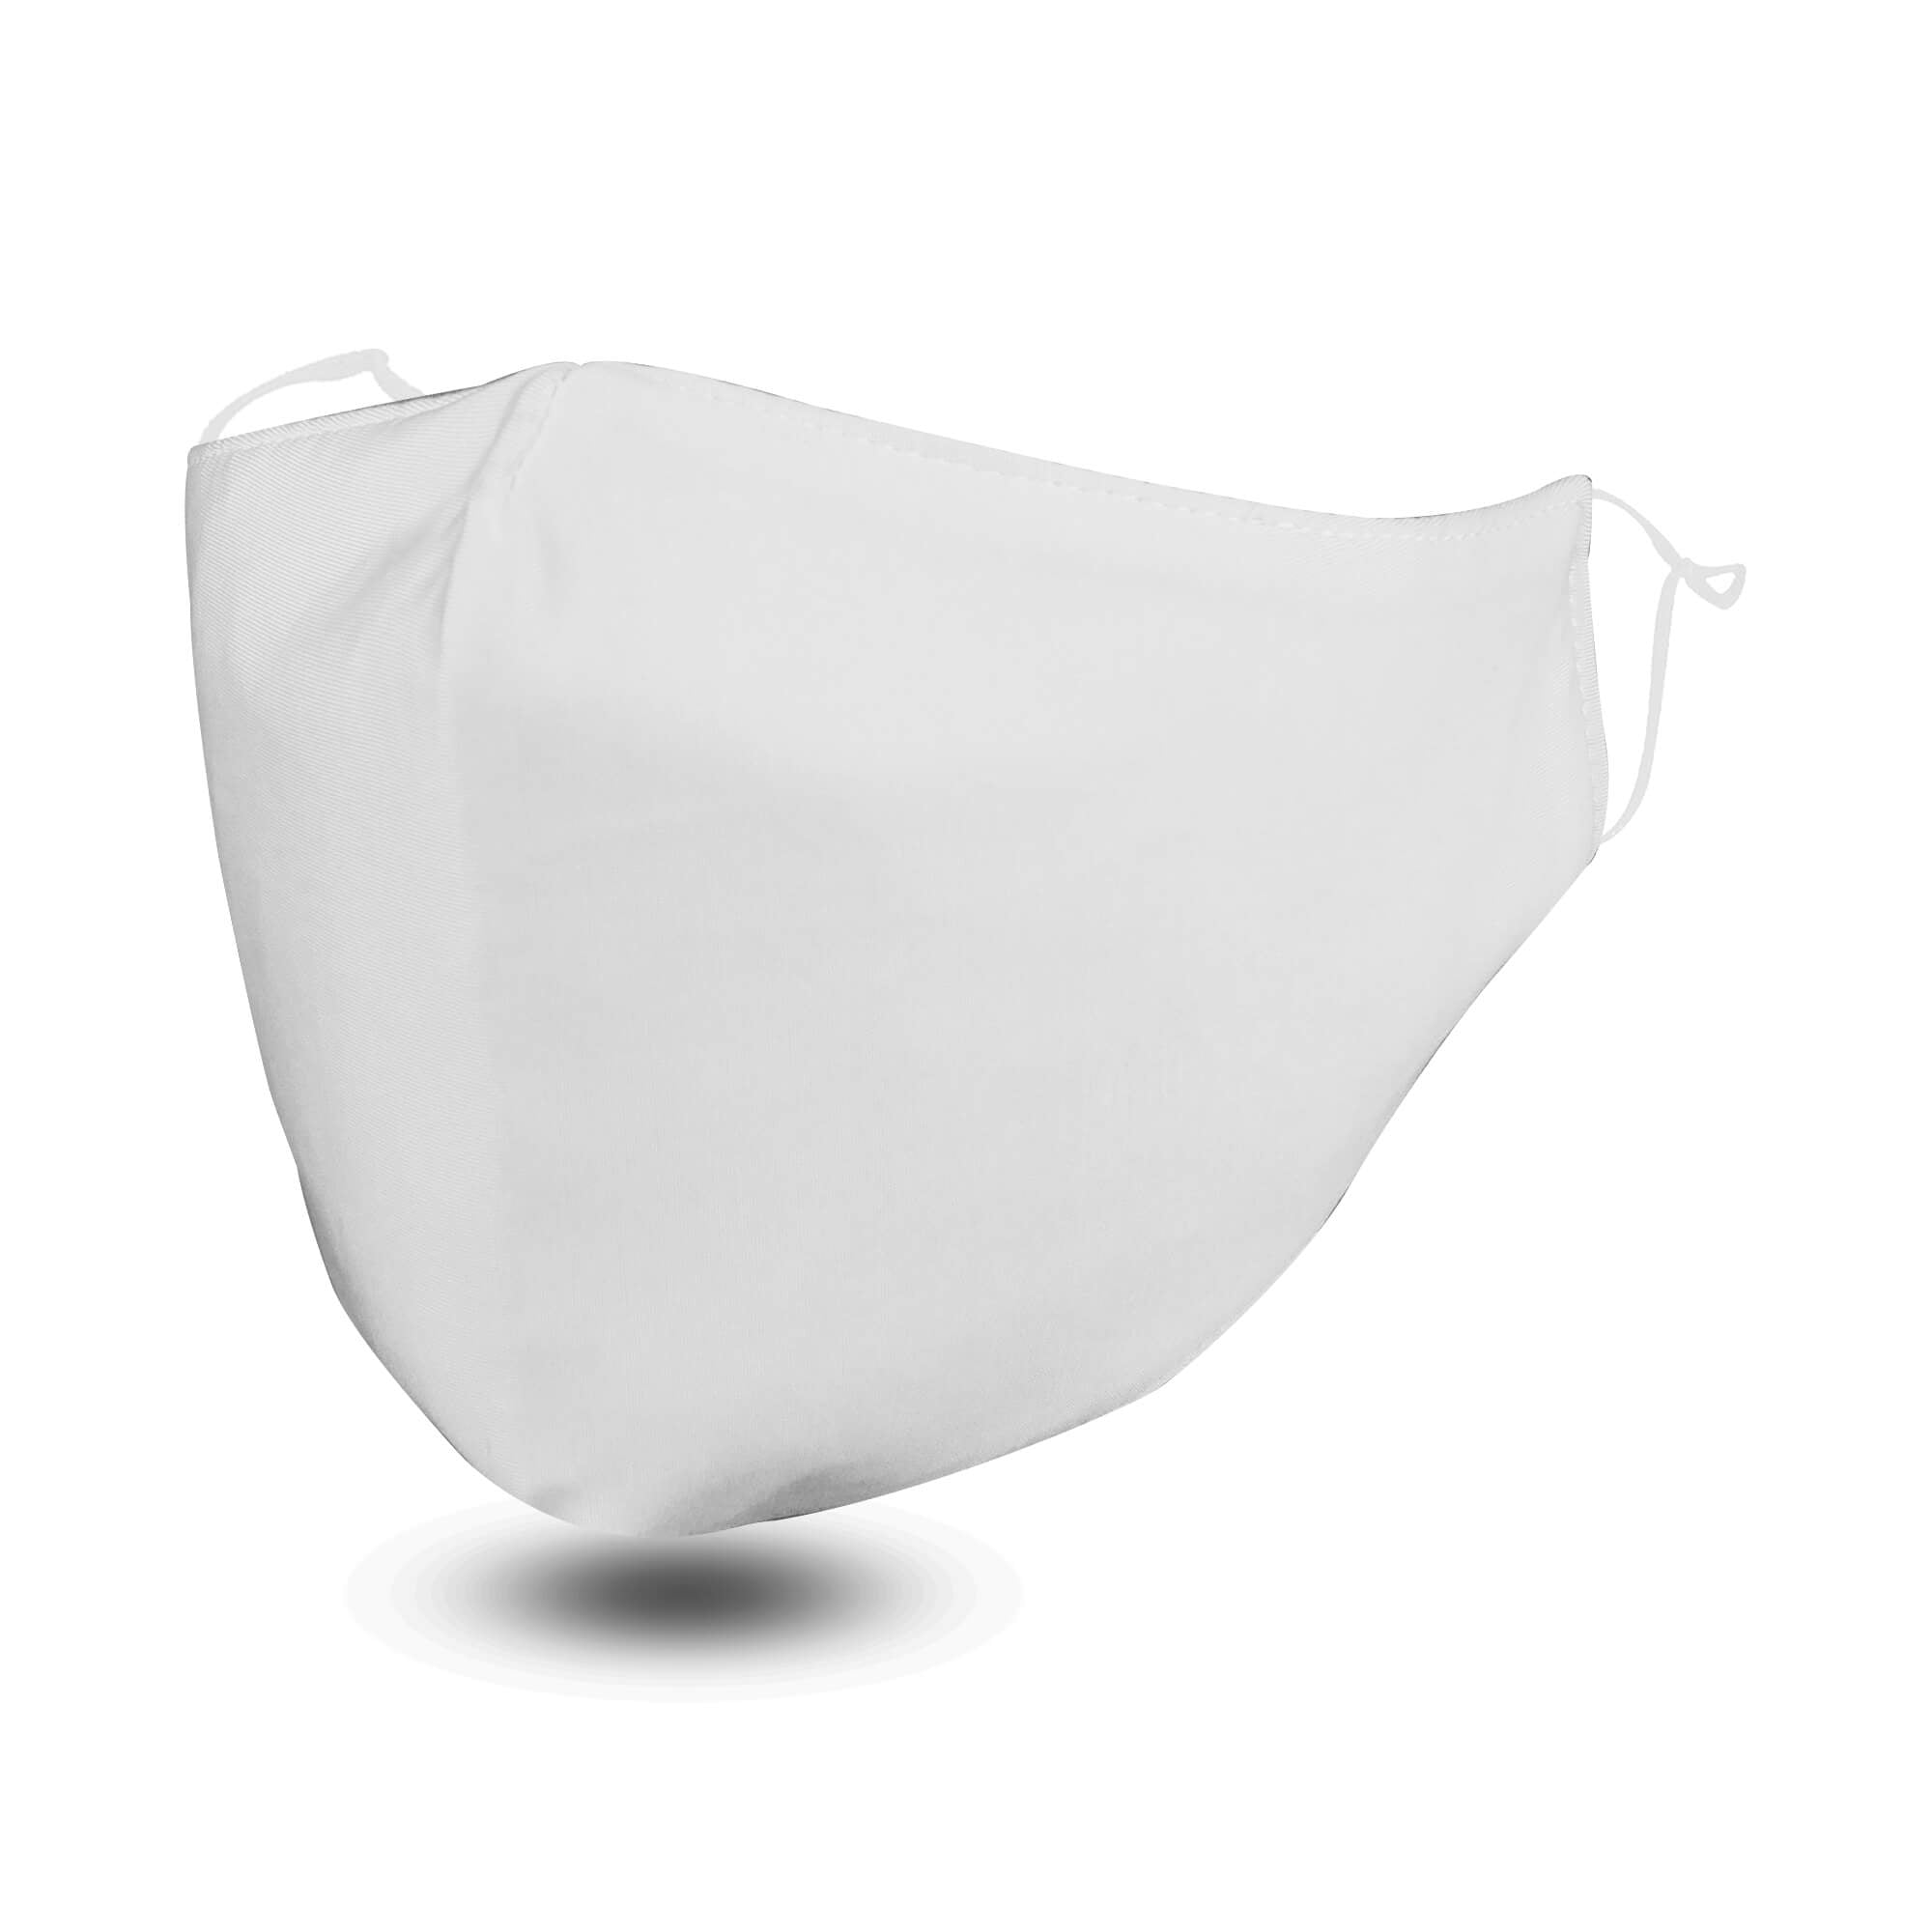 White FLOWZOOM Face Mask with Filter Pocket - Soft & Adjustable